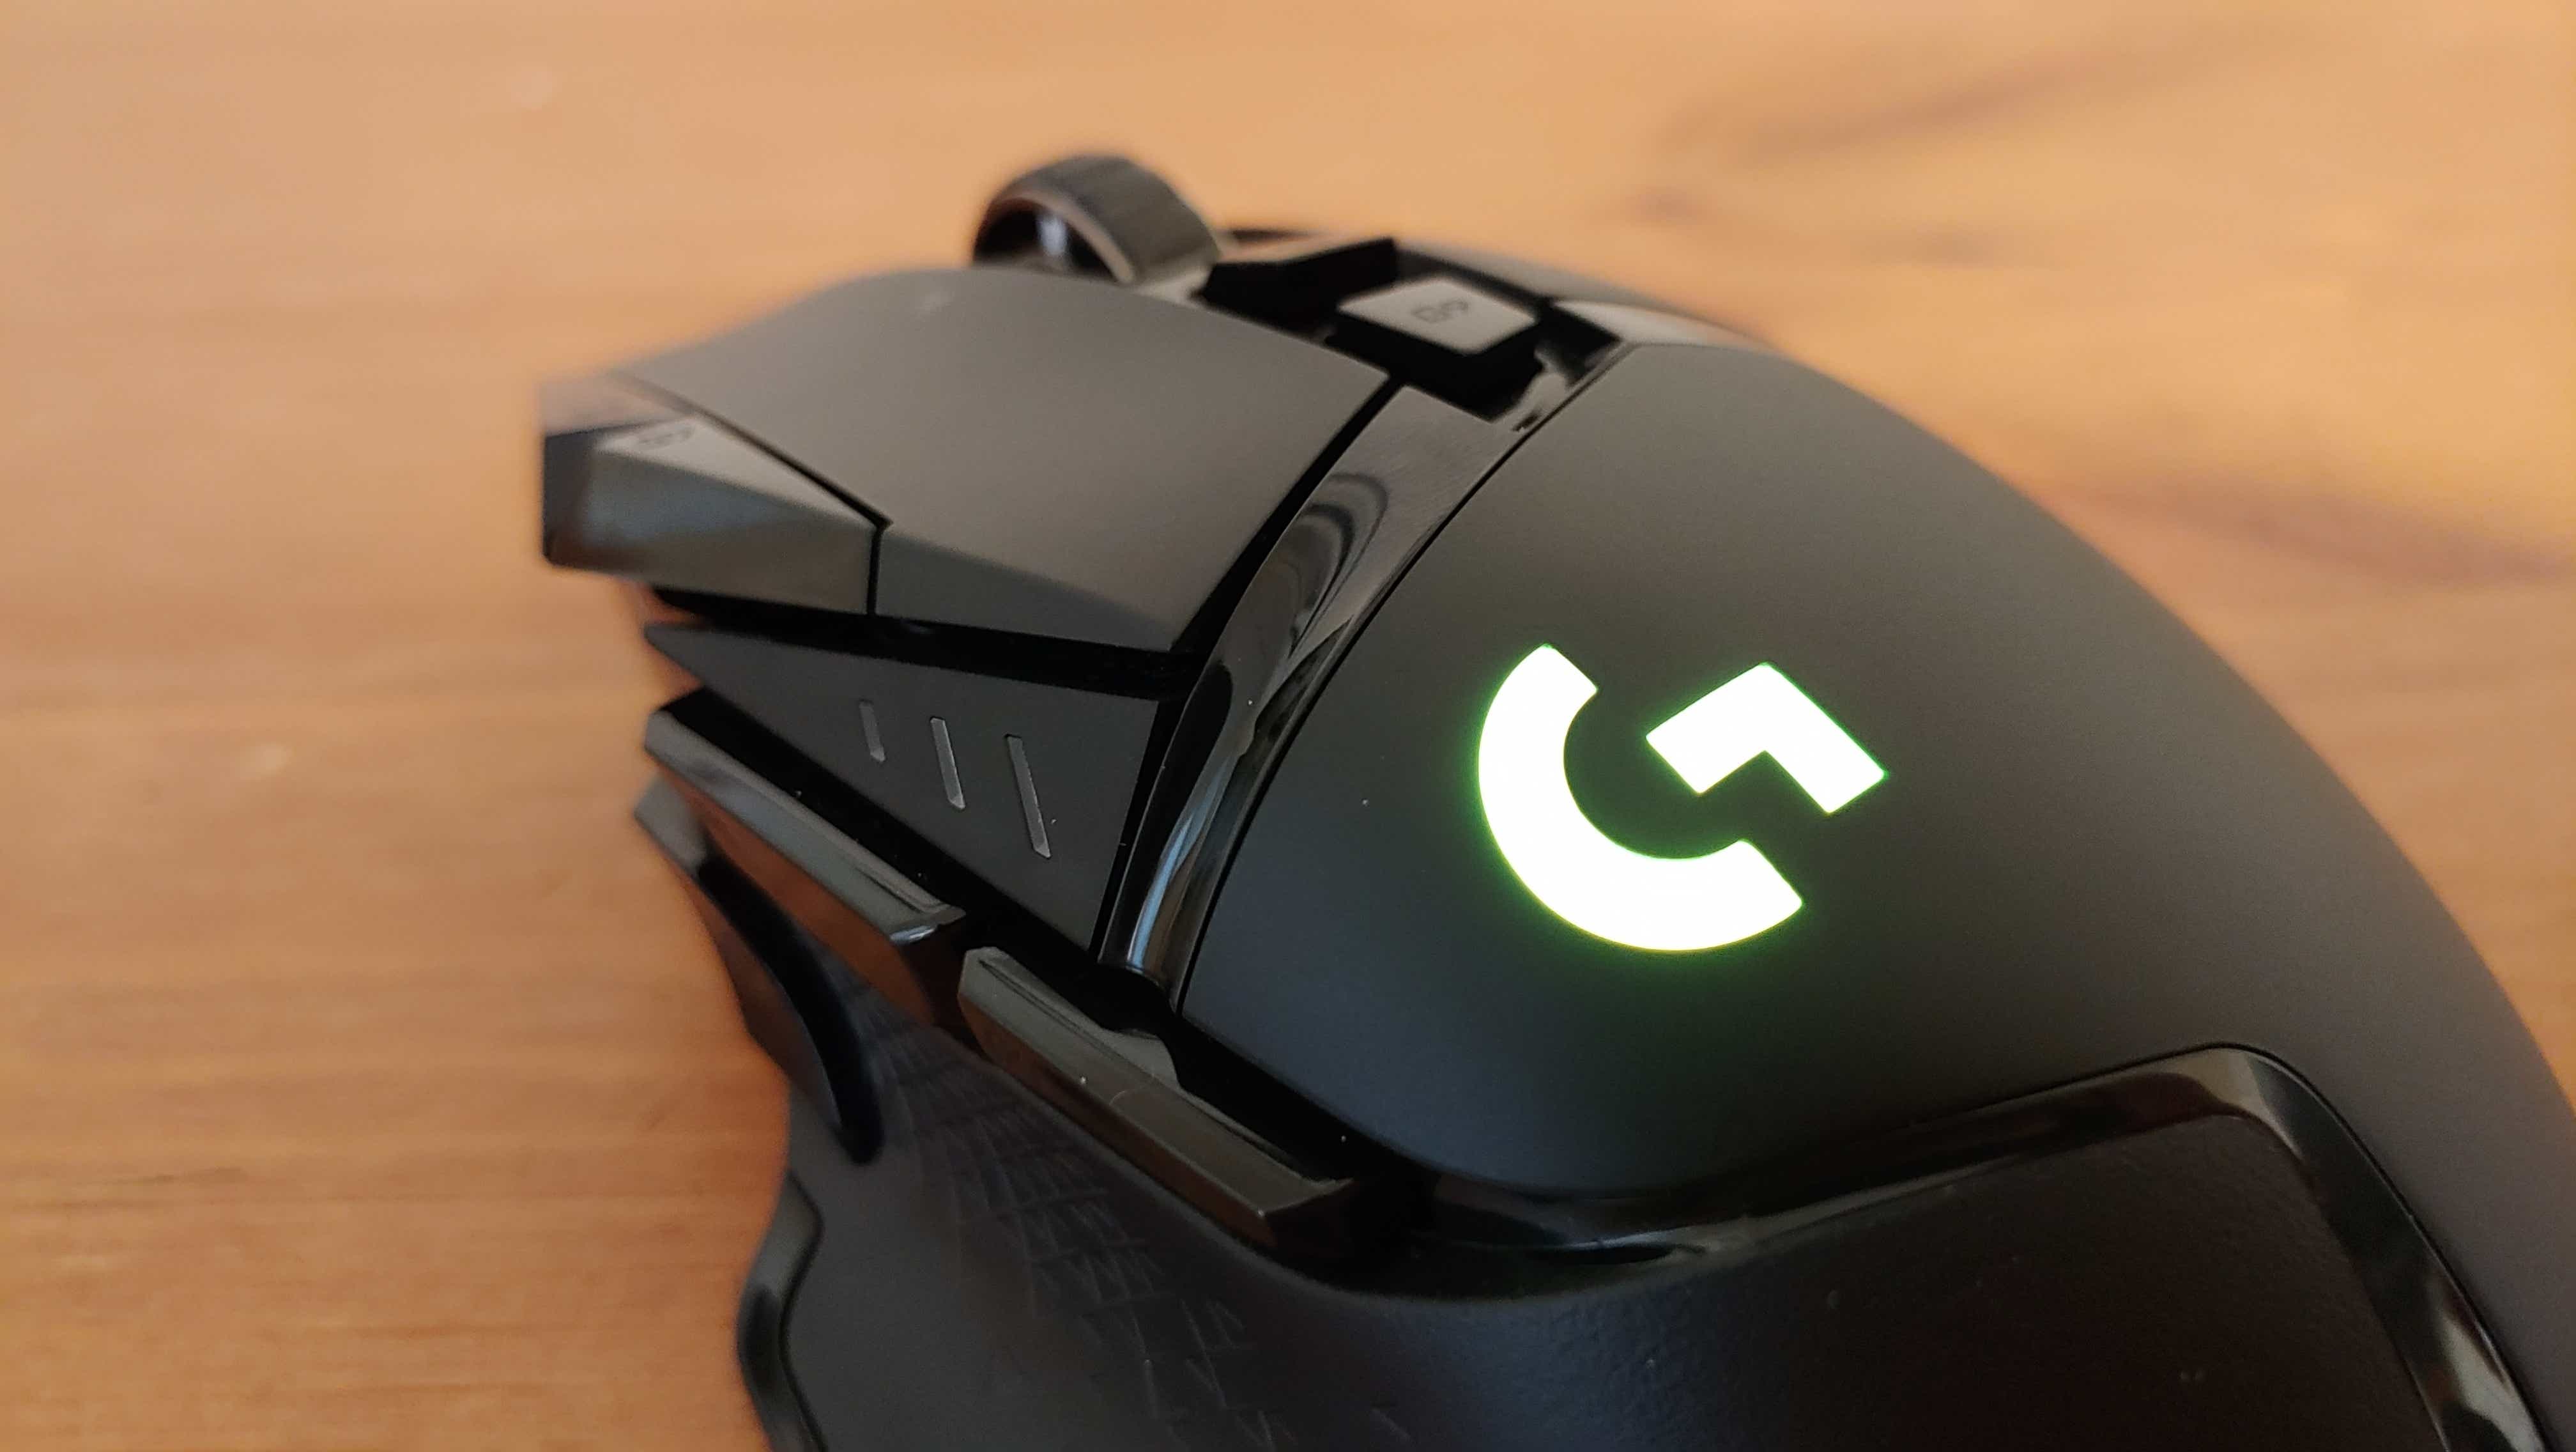 Logitech G502 Lightspeed - Best wireless mouse for gaming